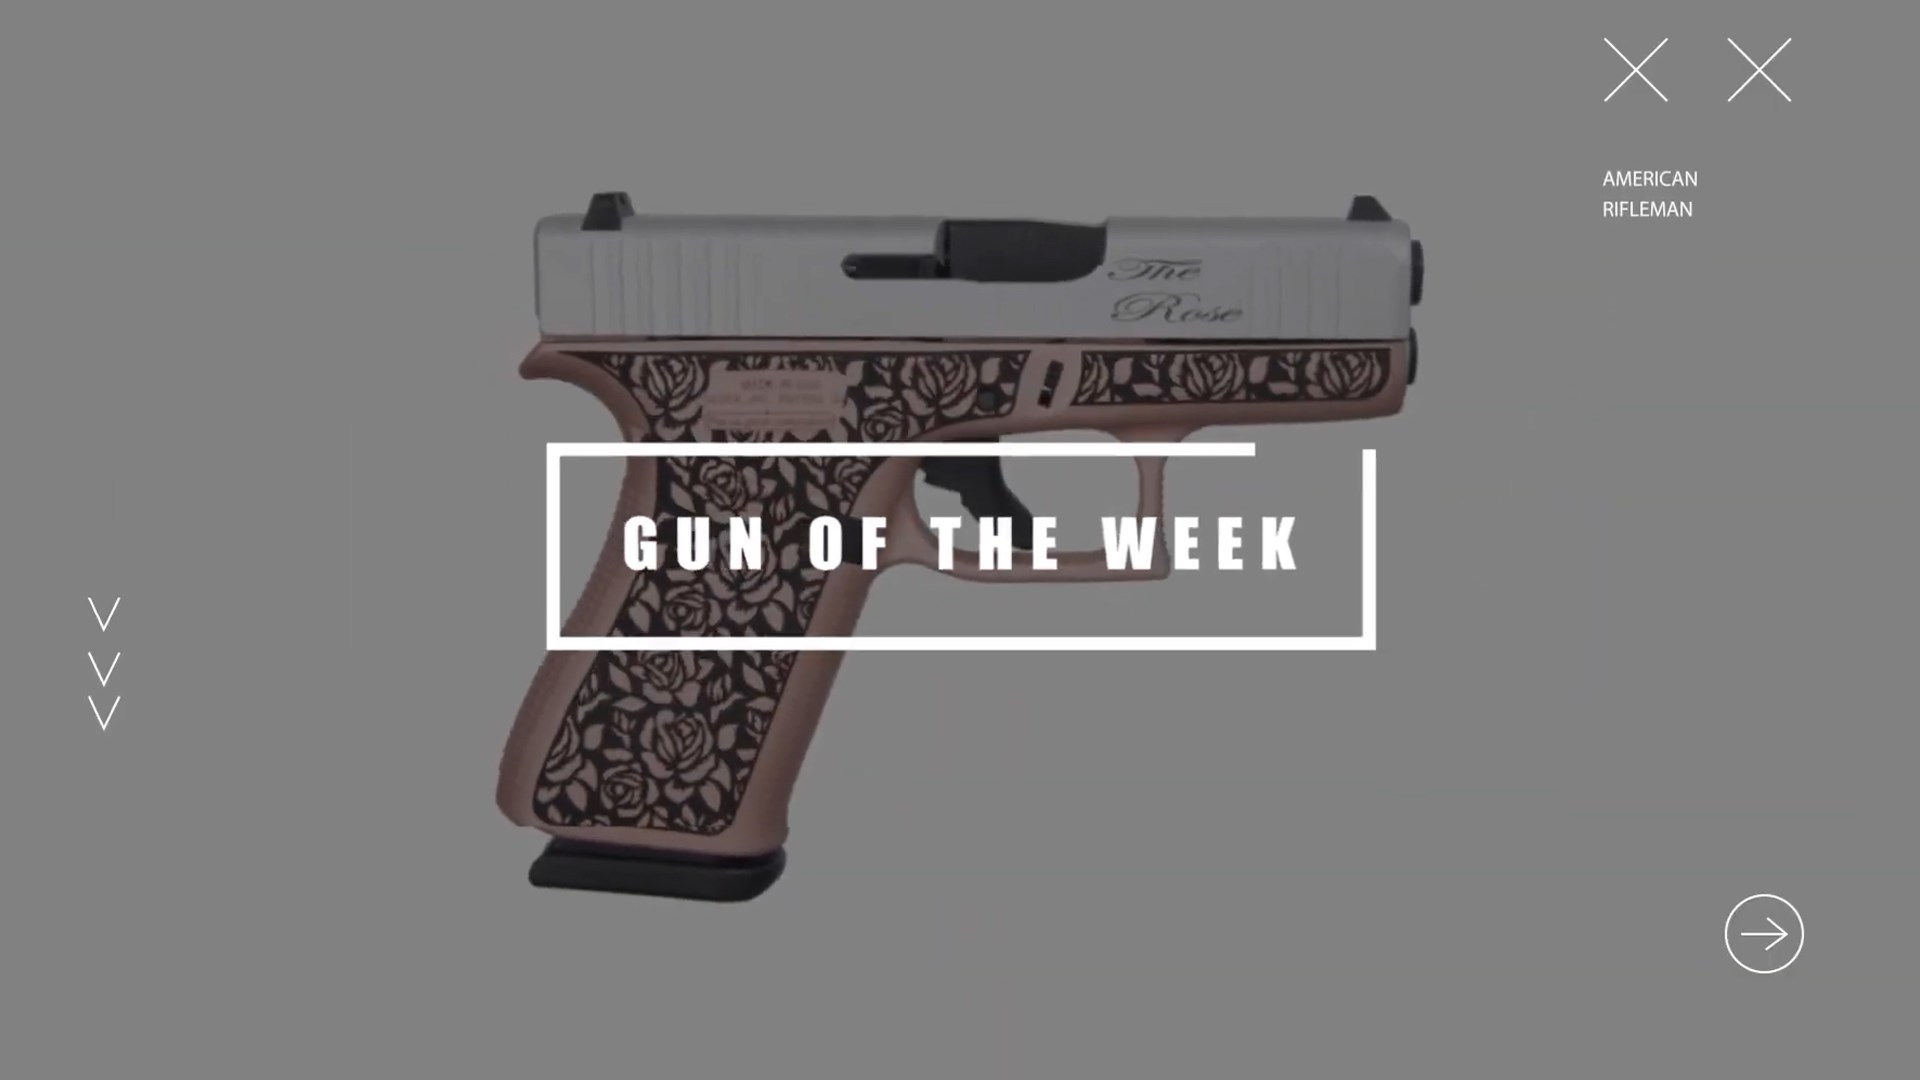 Davidson's Exclusive Apollo Custom Glock G43X The Rose handgun title screen text on image noting GUN OF THE WEEK AMERICAN RIFLEMAN XX